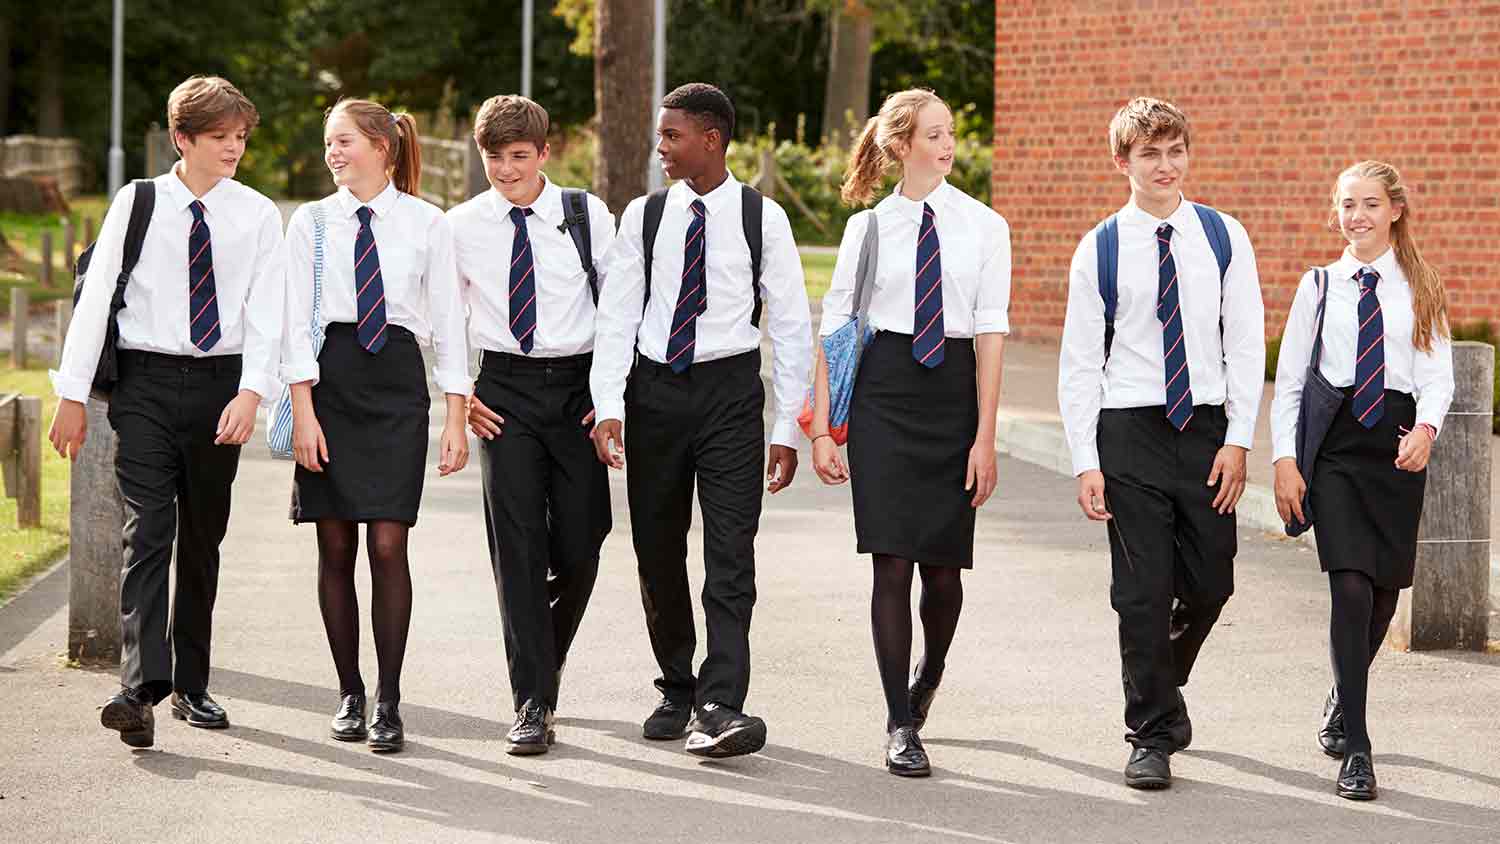 Seven school children in uniform, no blazers, confidently walking down a path